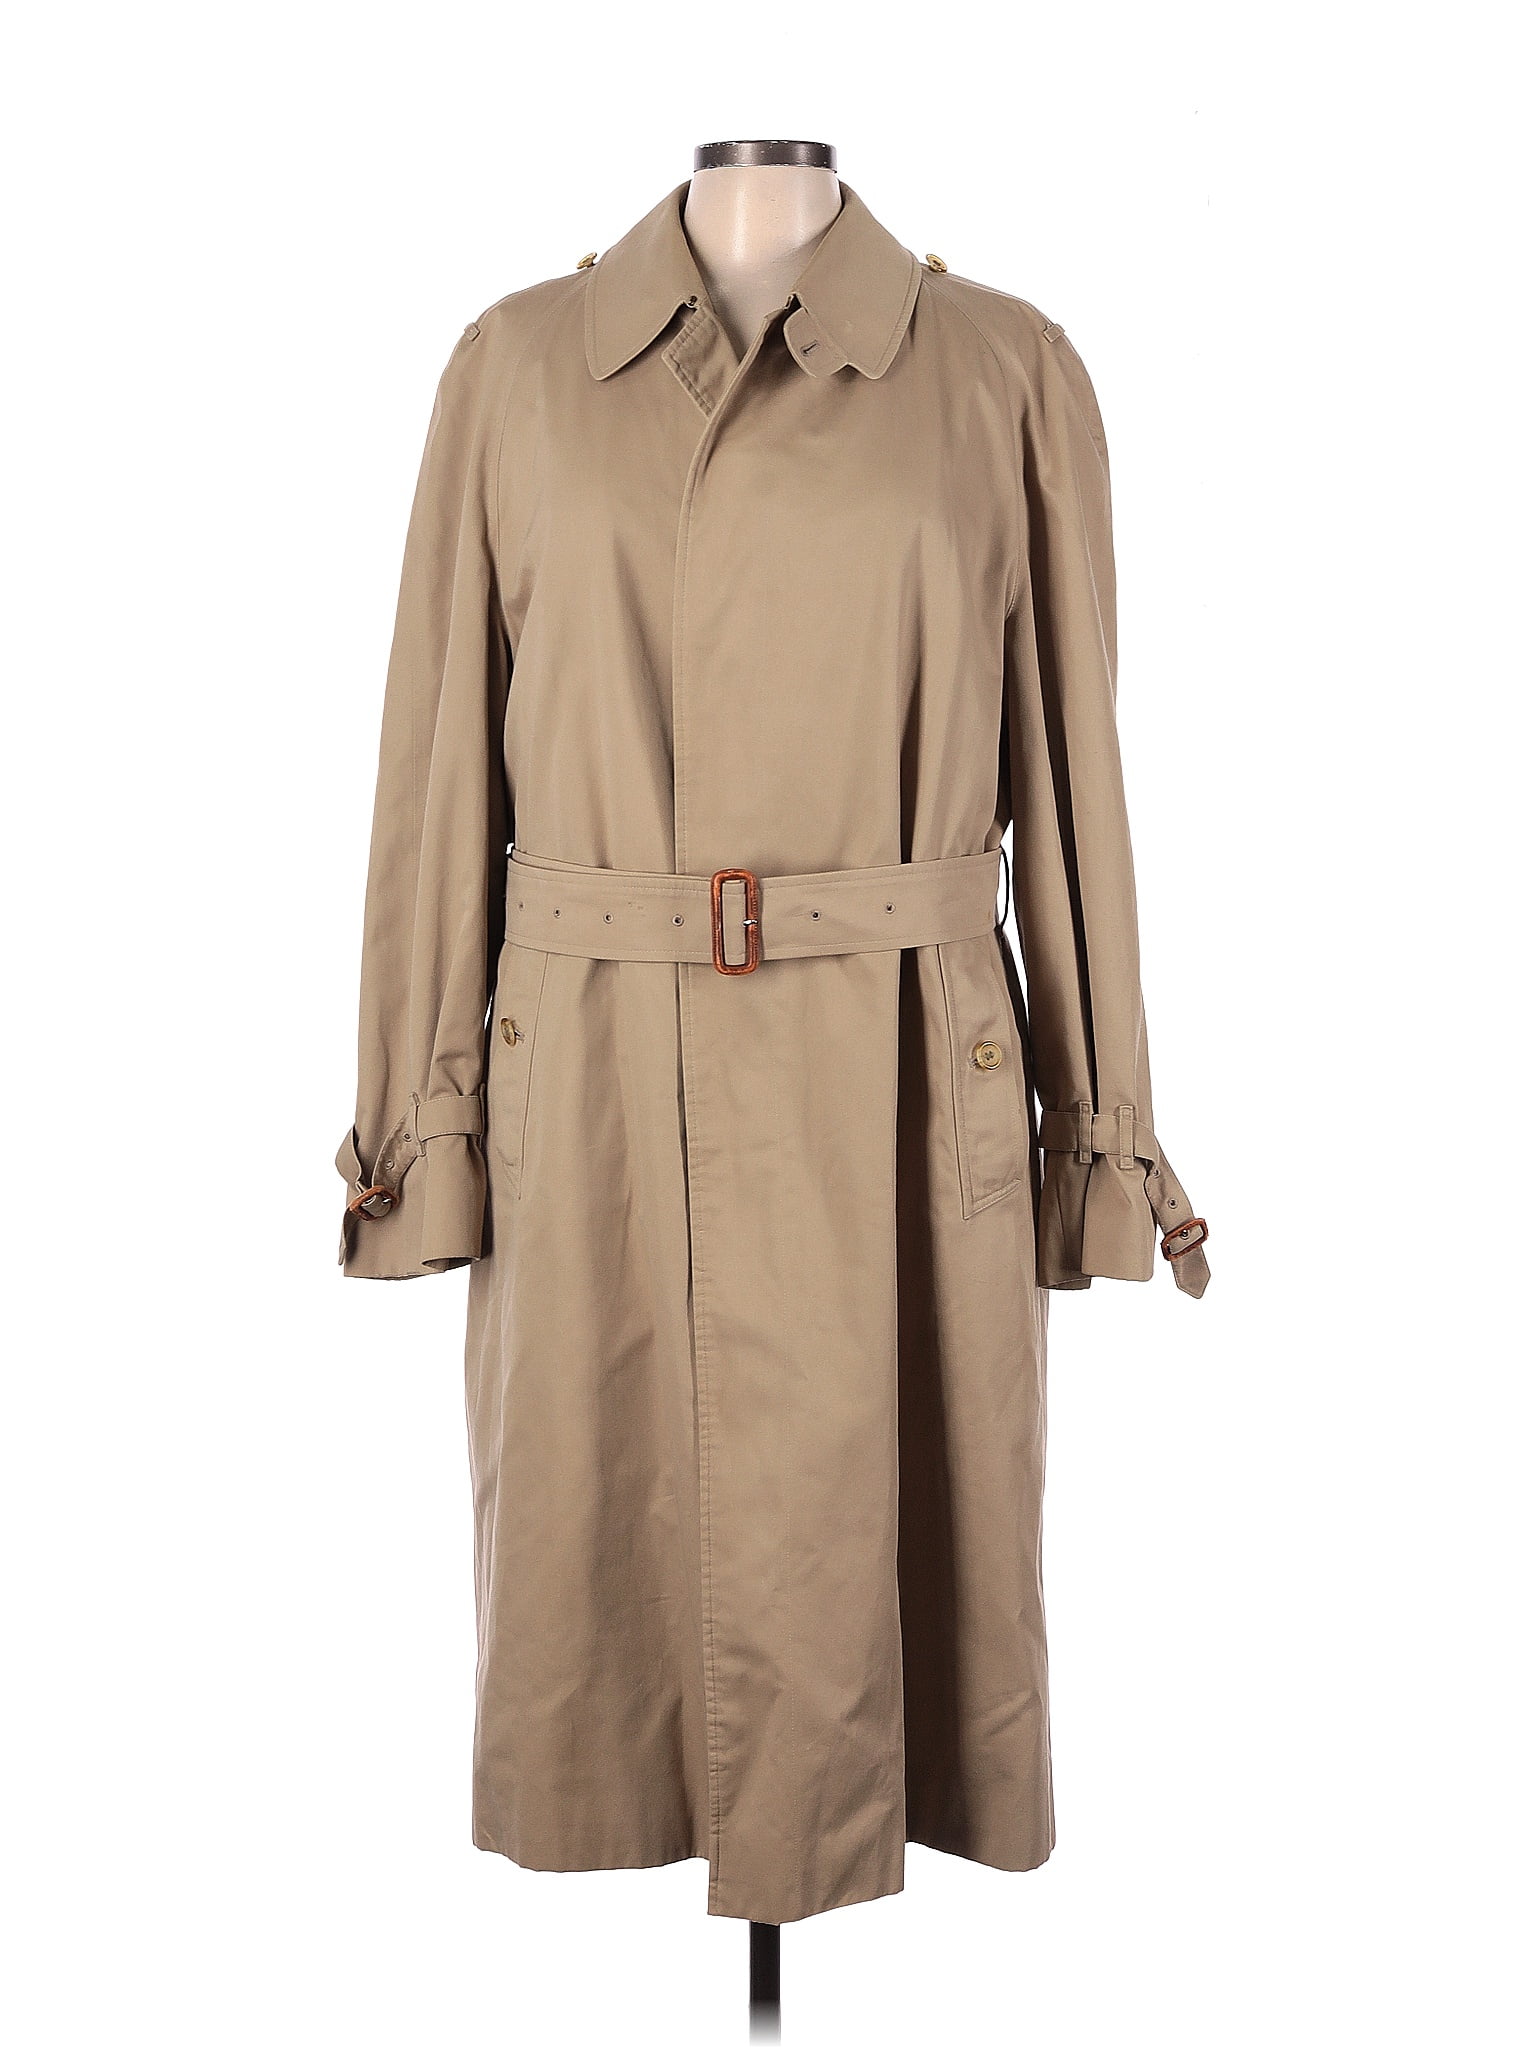 Burberry Solid Tan Vintage Trenchcoat Size L - 85% off | thredUP